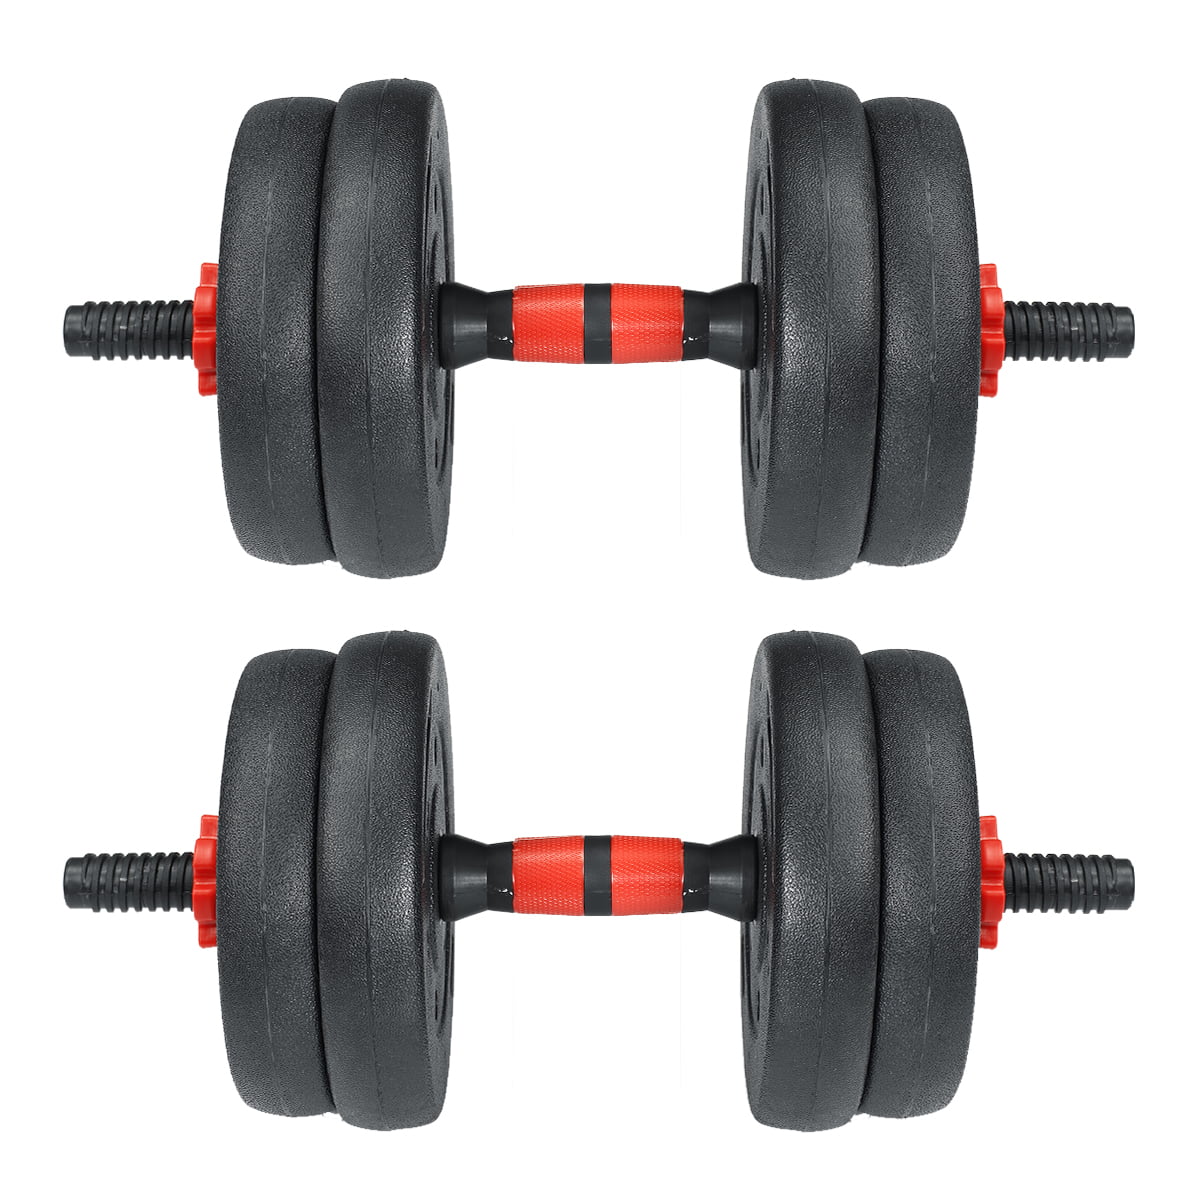 Adjustable Dumbbell Fitness Weight Set Barbell KettleBell Home Gym 10KG 30KG